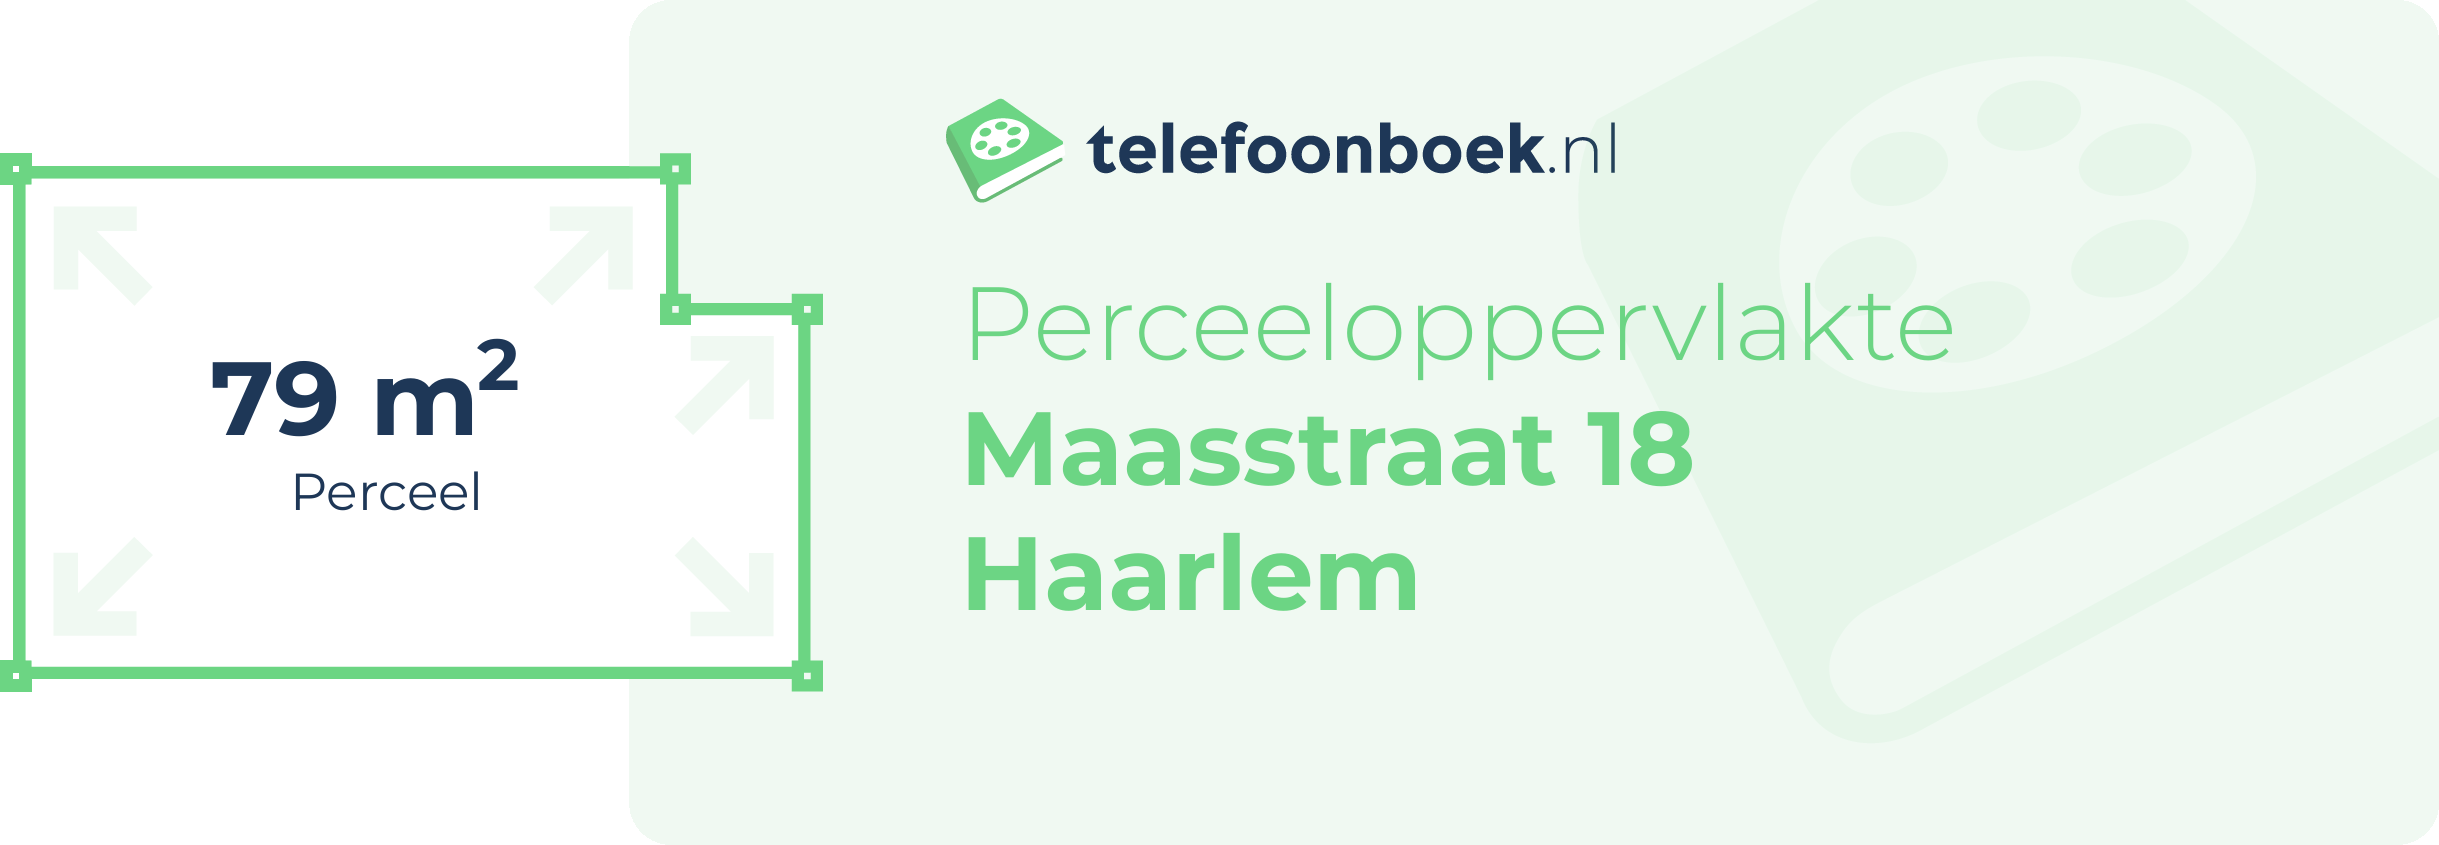 Perceeloppervlakte Maasstraat 18 Haarlem